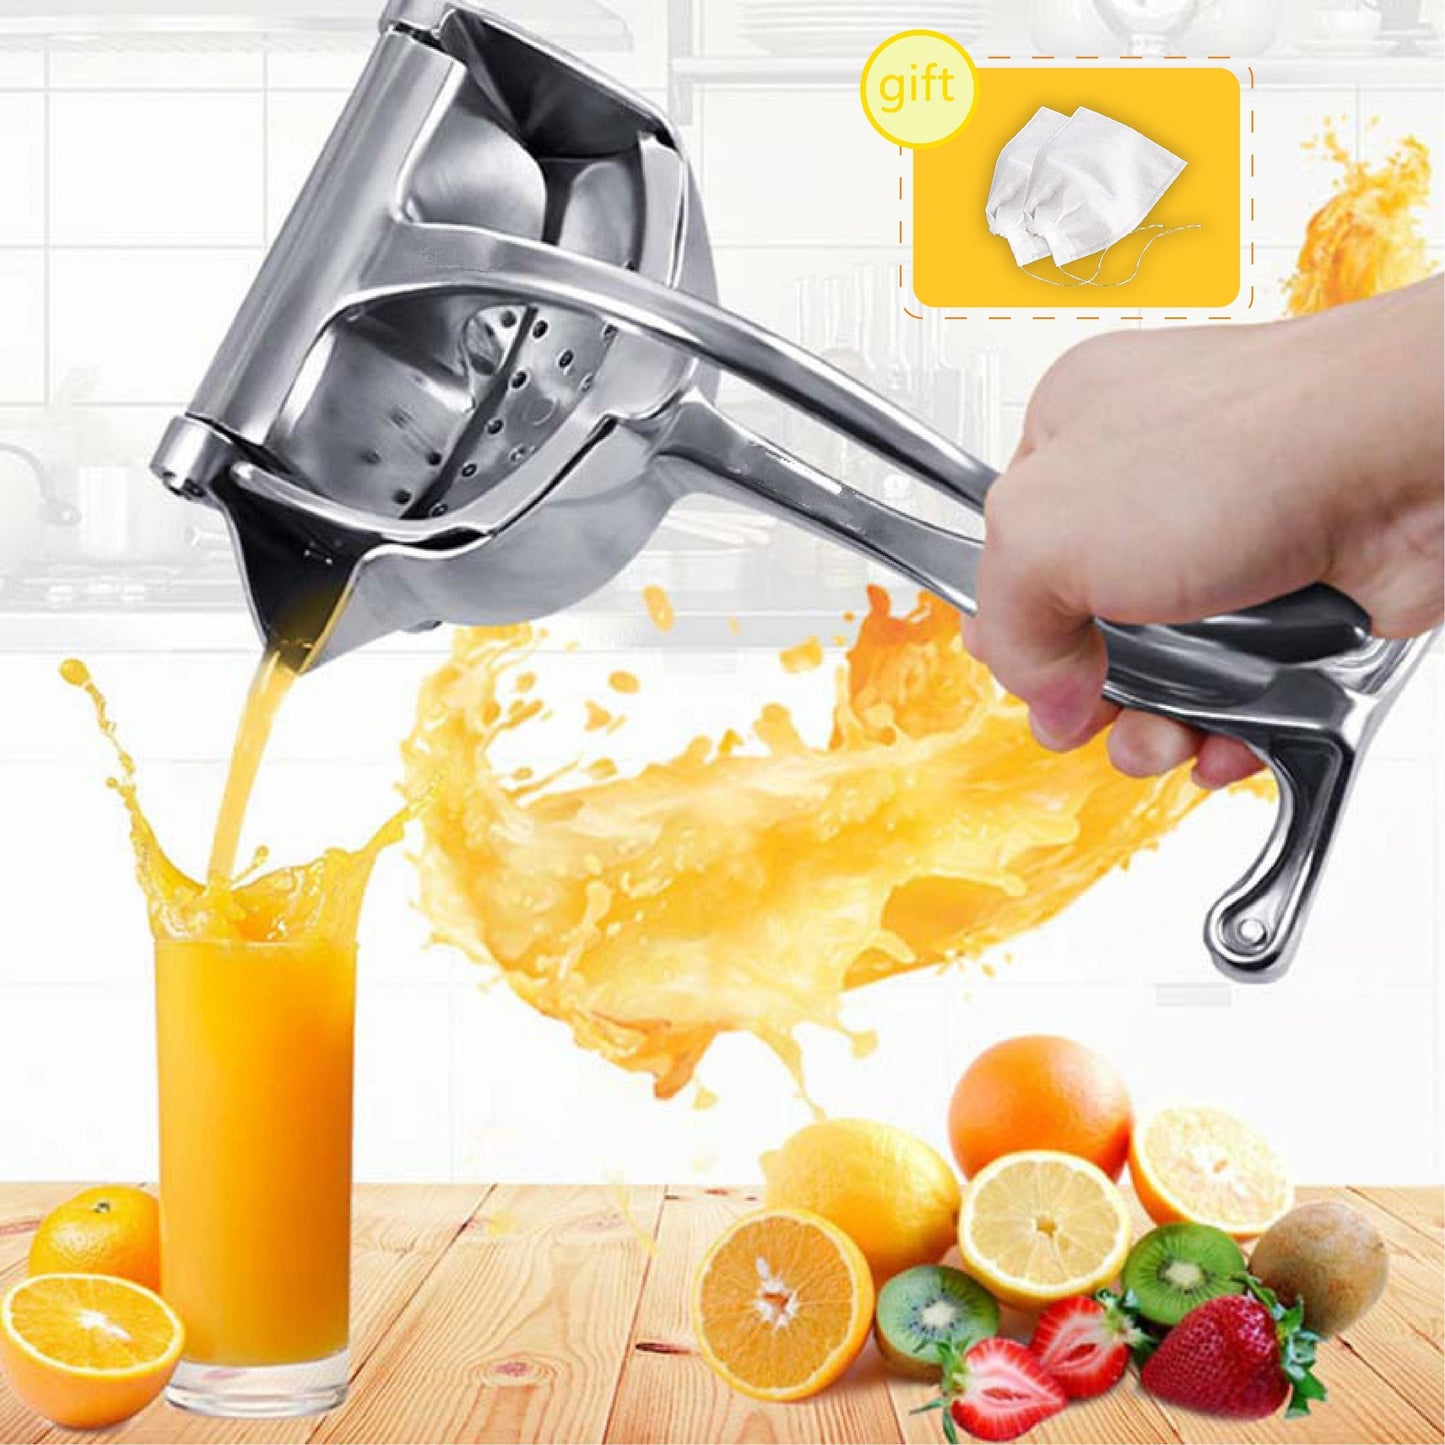 Manual-Juice-Squeezer-Aluminum-Alloy-Hand-Pressure-Juicer-Pomegranate-Orange-Lemon-Sugar-Cane-Juice-Kitchen-Fruit-Tool